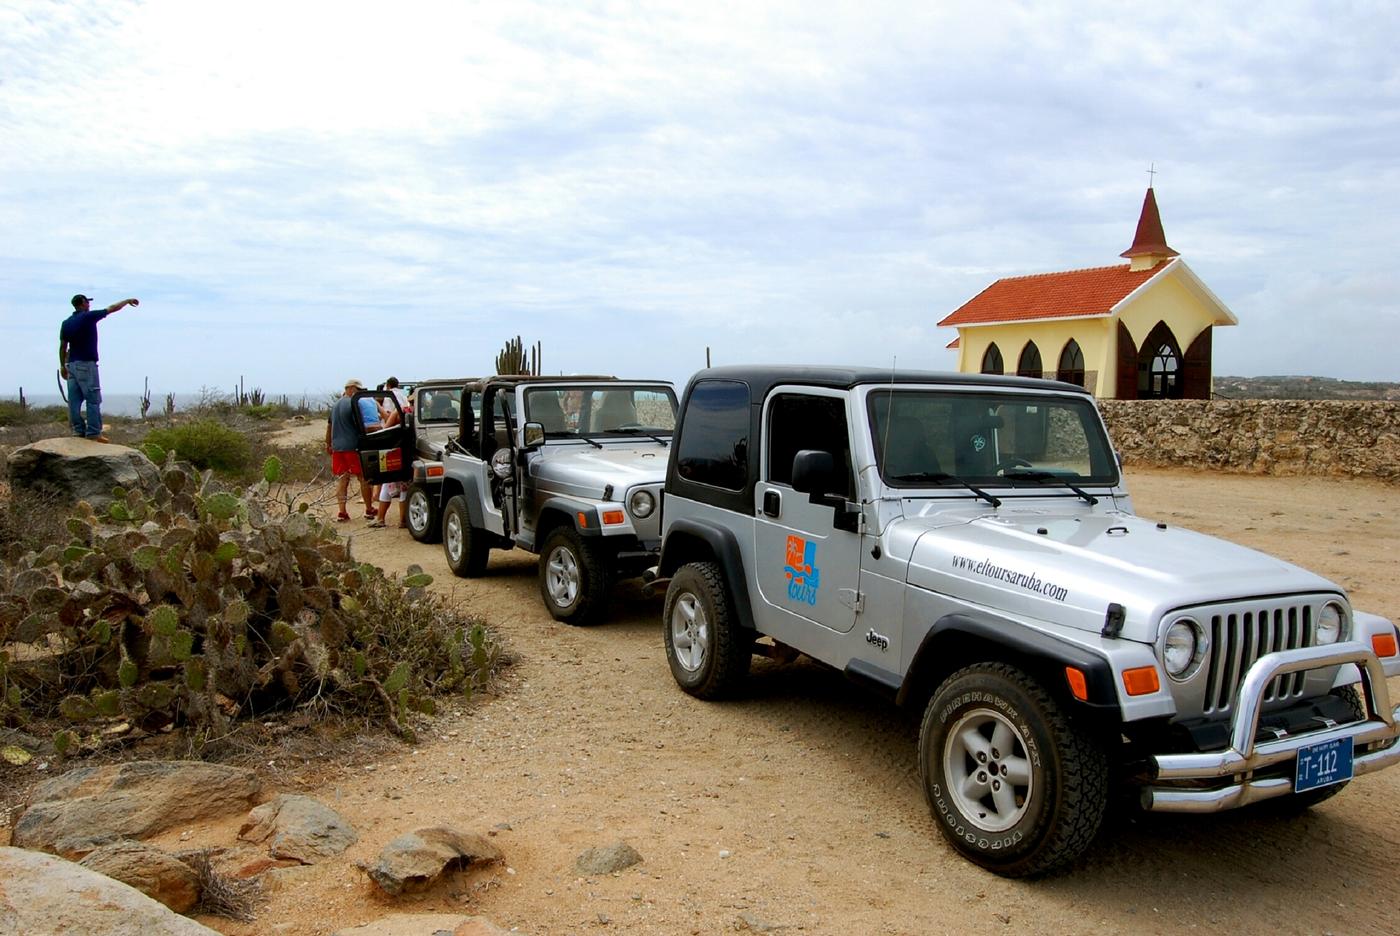 Best jeep tour in aruba #2